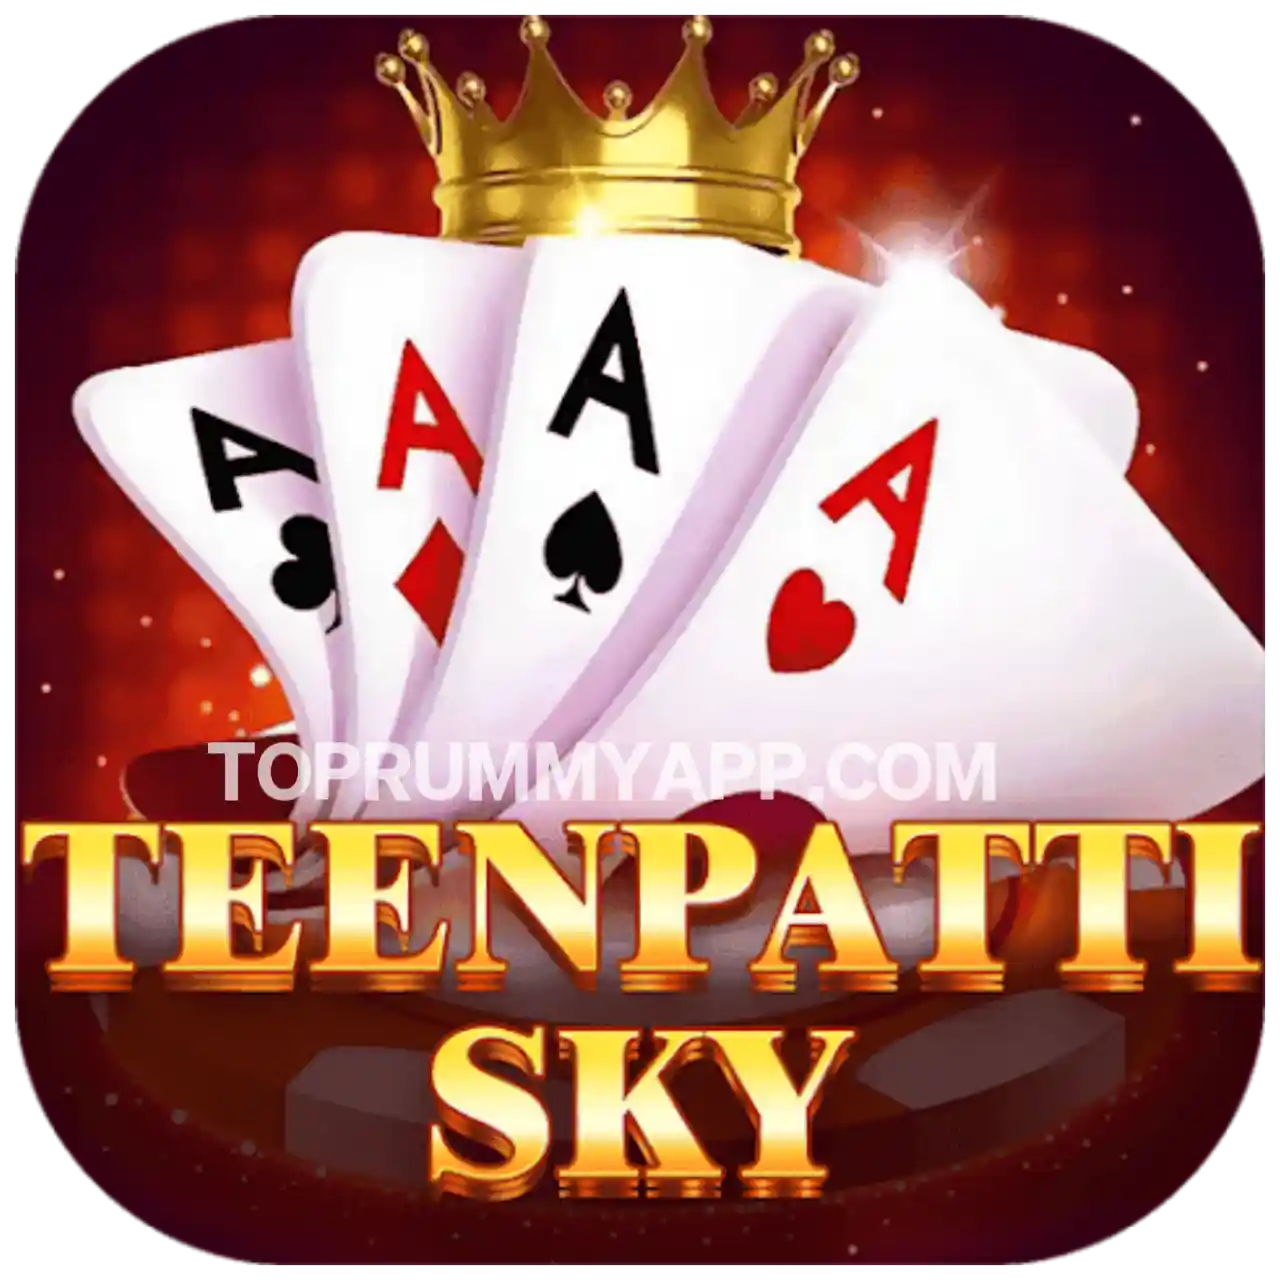 Teen Patti Sky App Download - Teen Patti Sky Apk Download